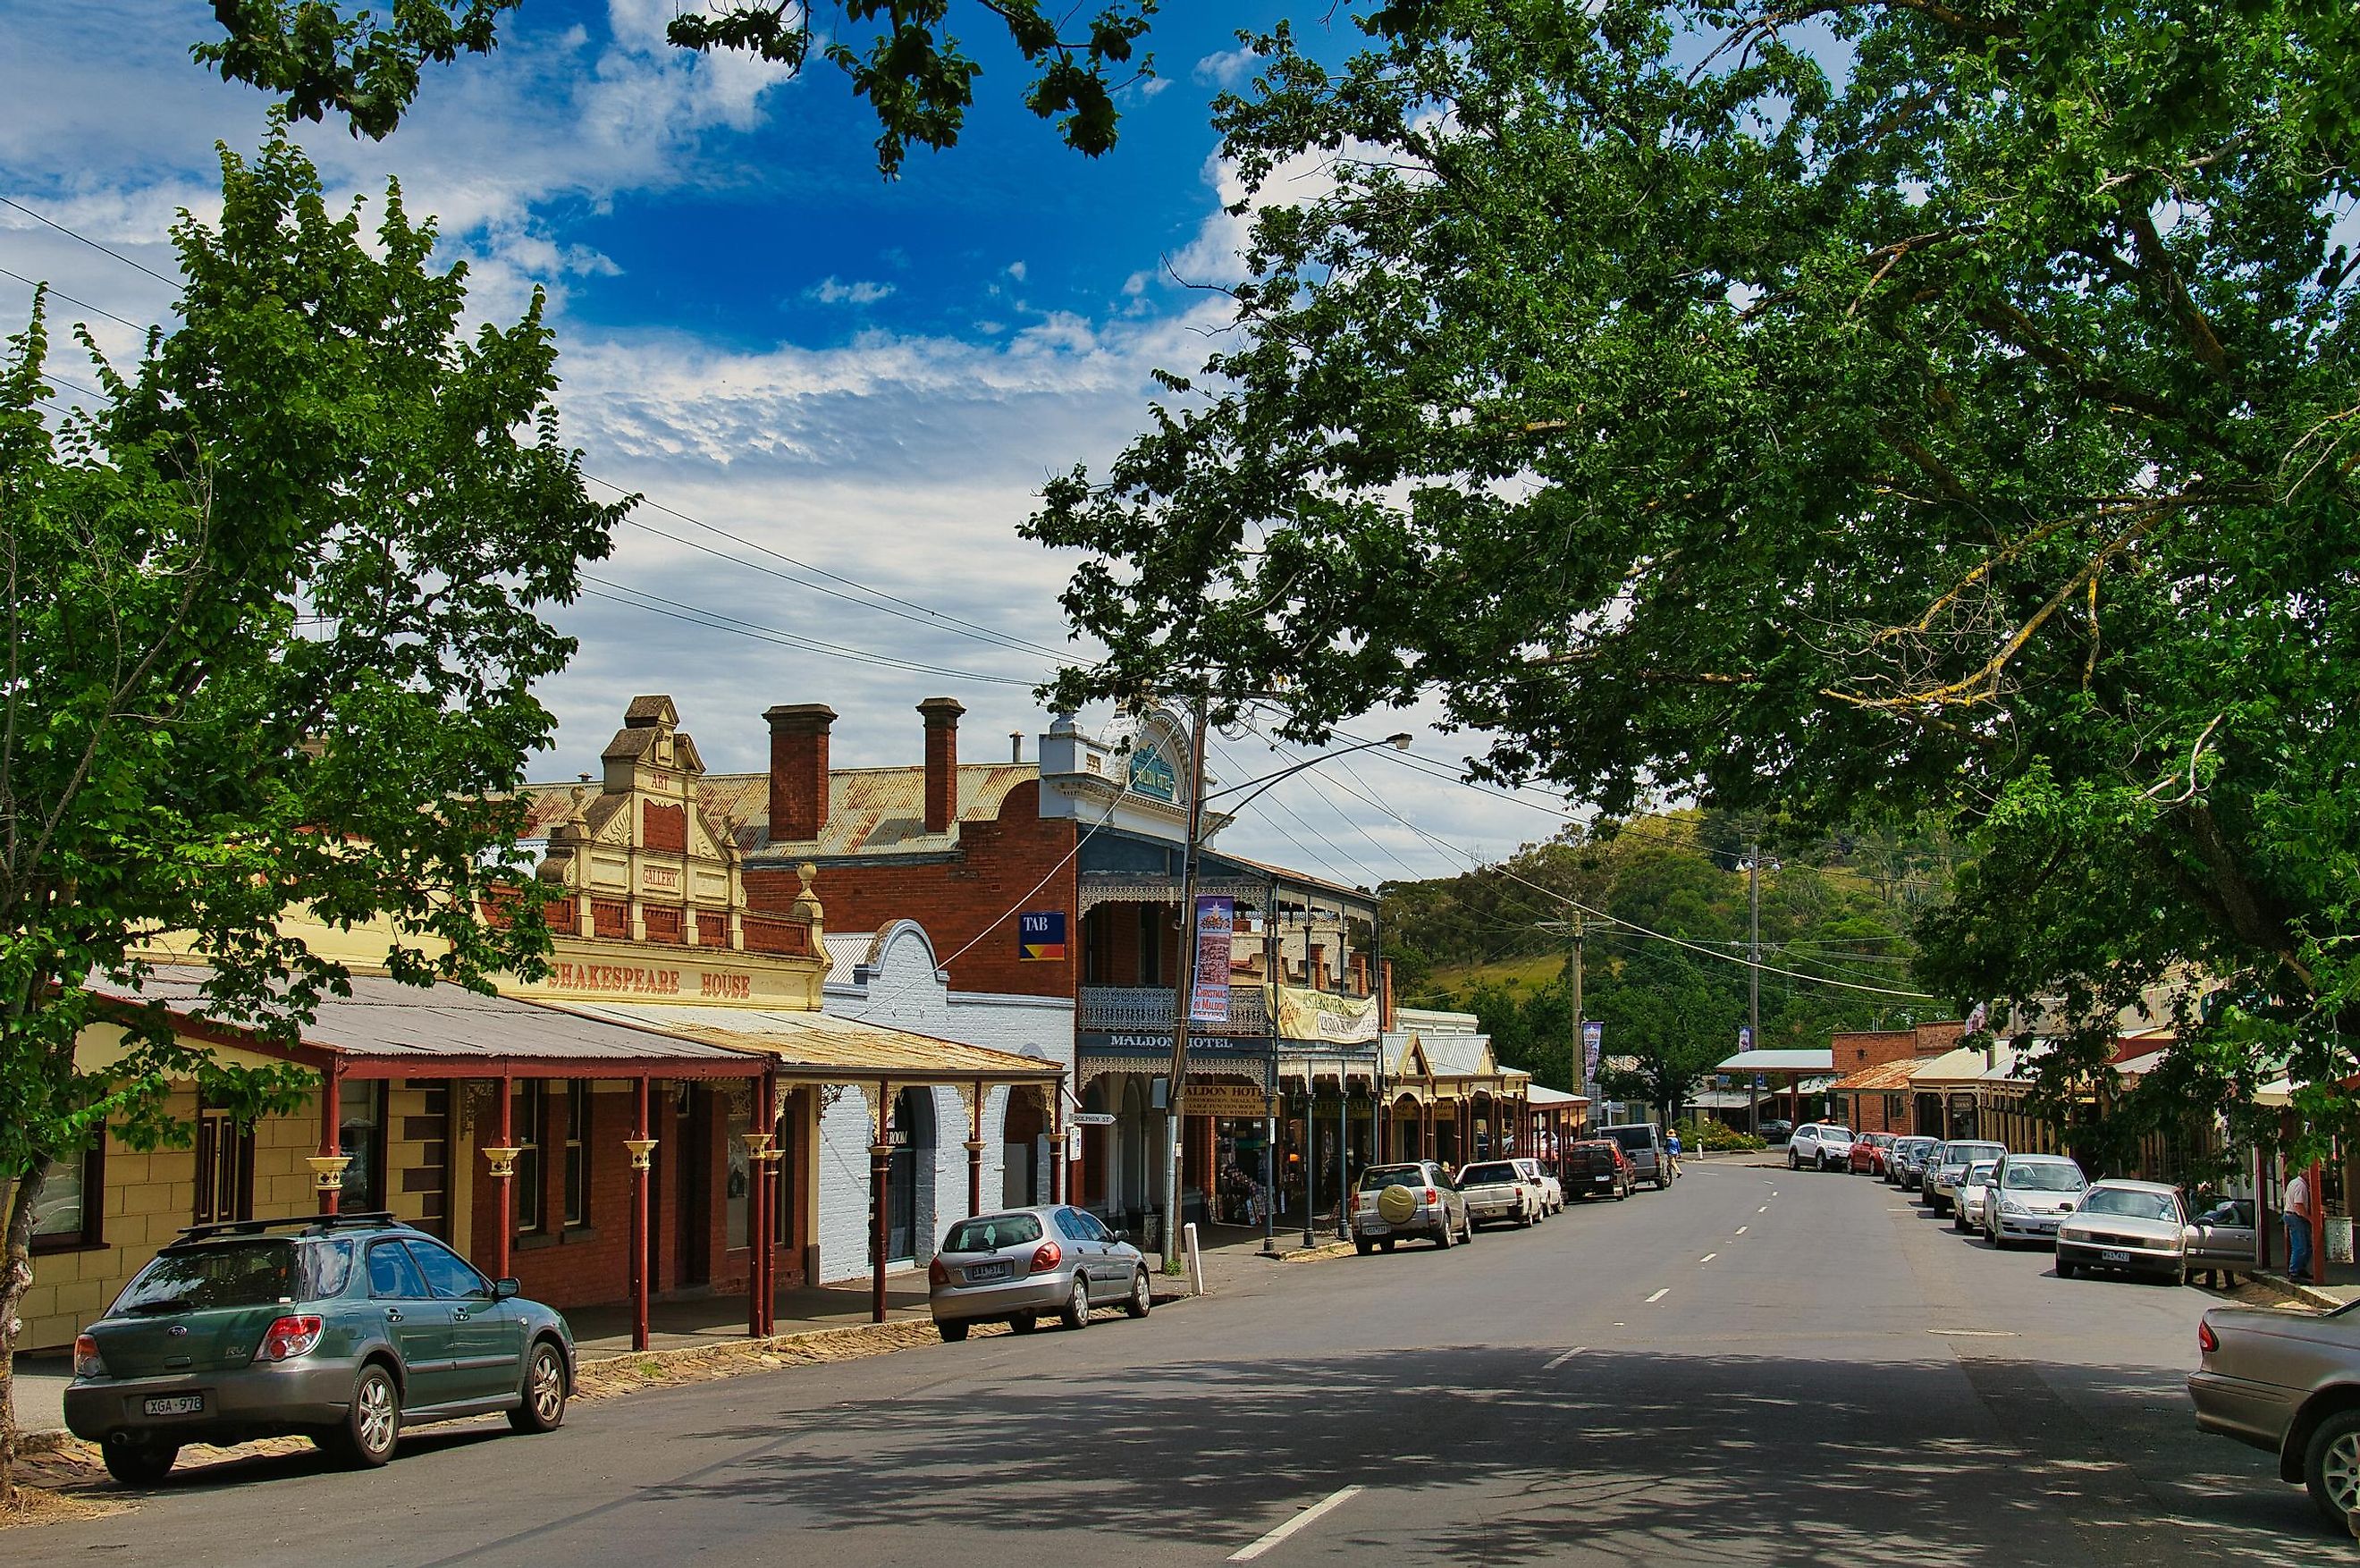 Maldon, Australia. The Main Street of the old gold mining town of Maldon, Central Victoria, Australia